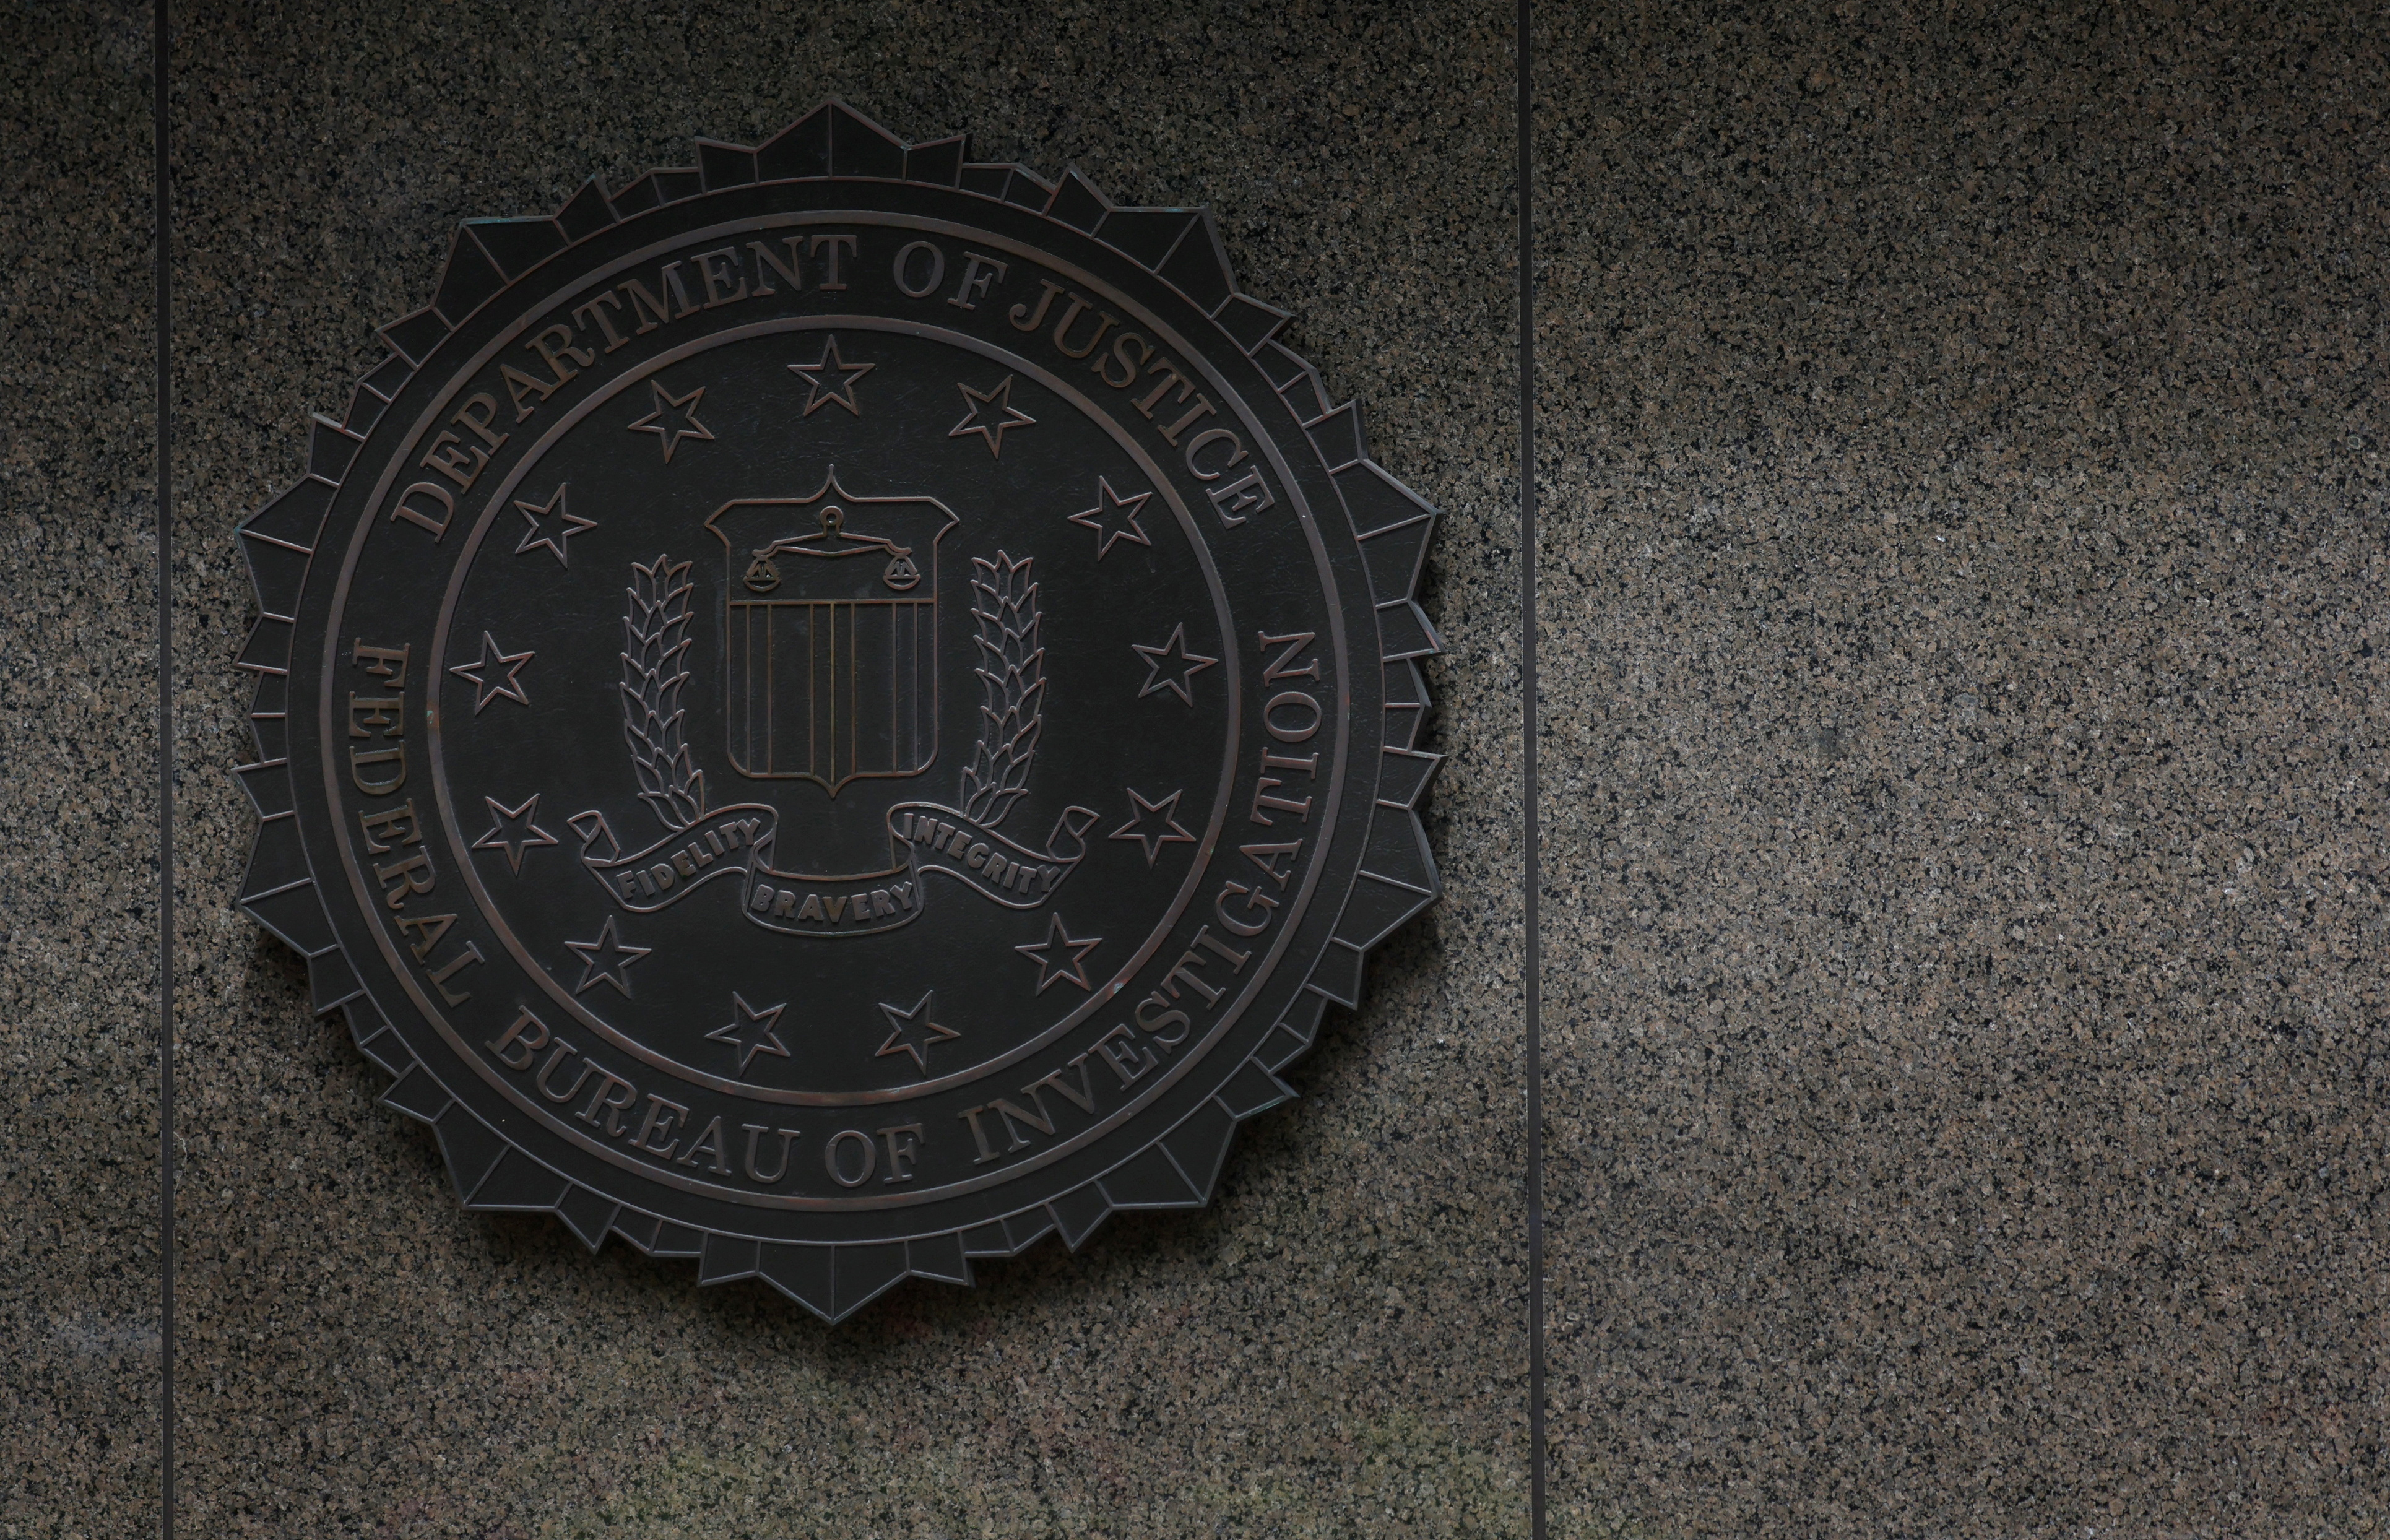 Scenes outside of the FBI building in Washington